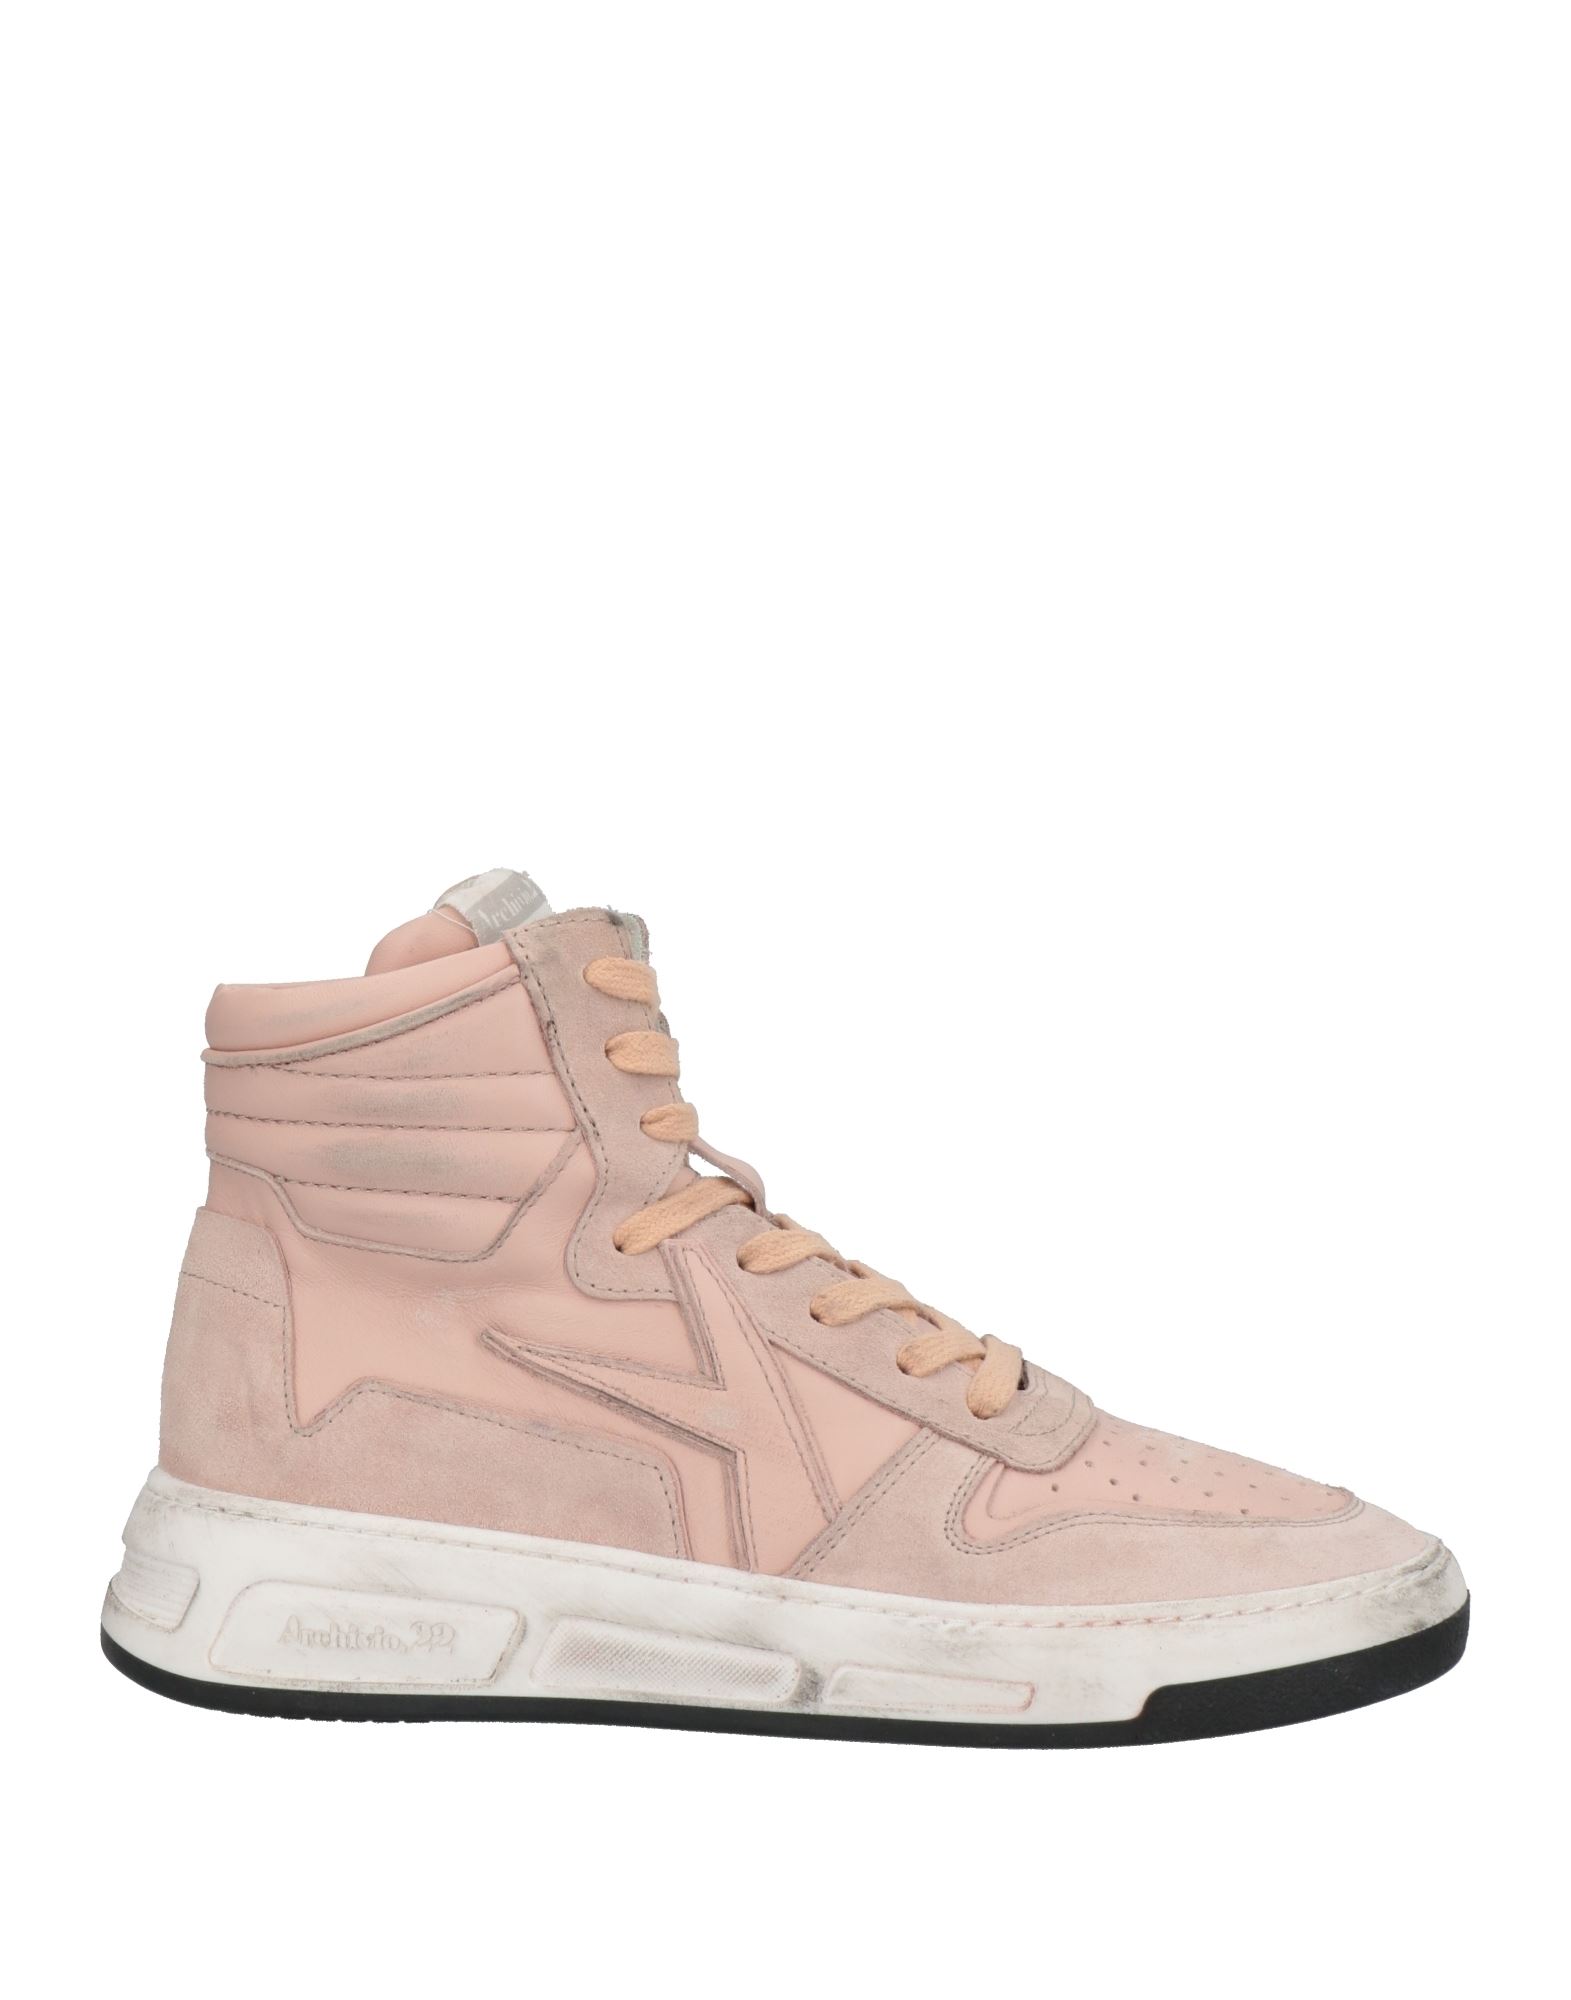 Archivio,22 Sneakers In Light Pink